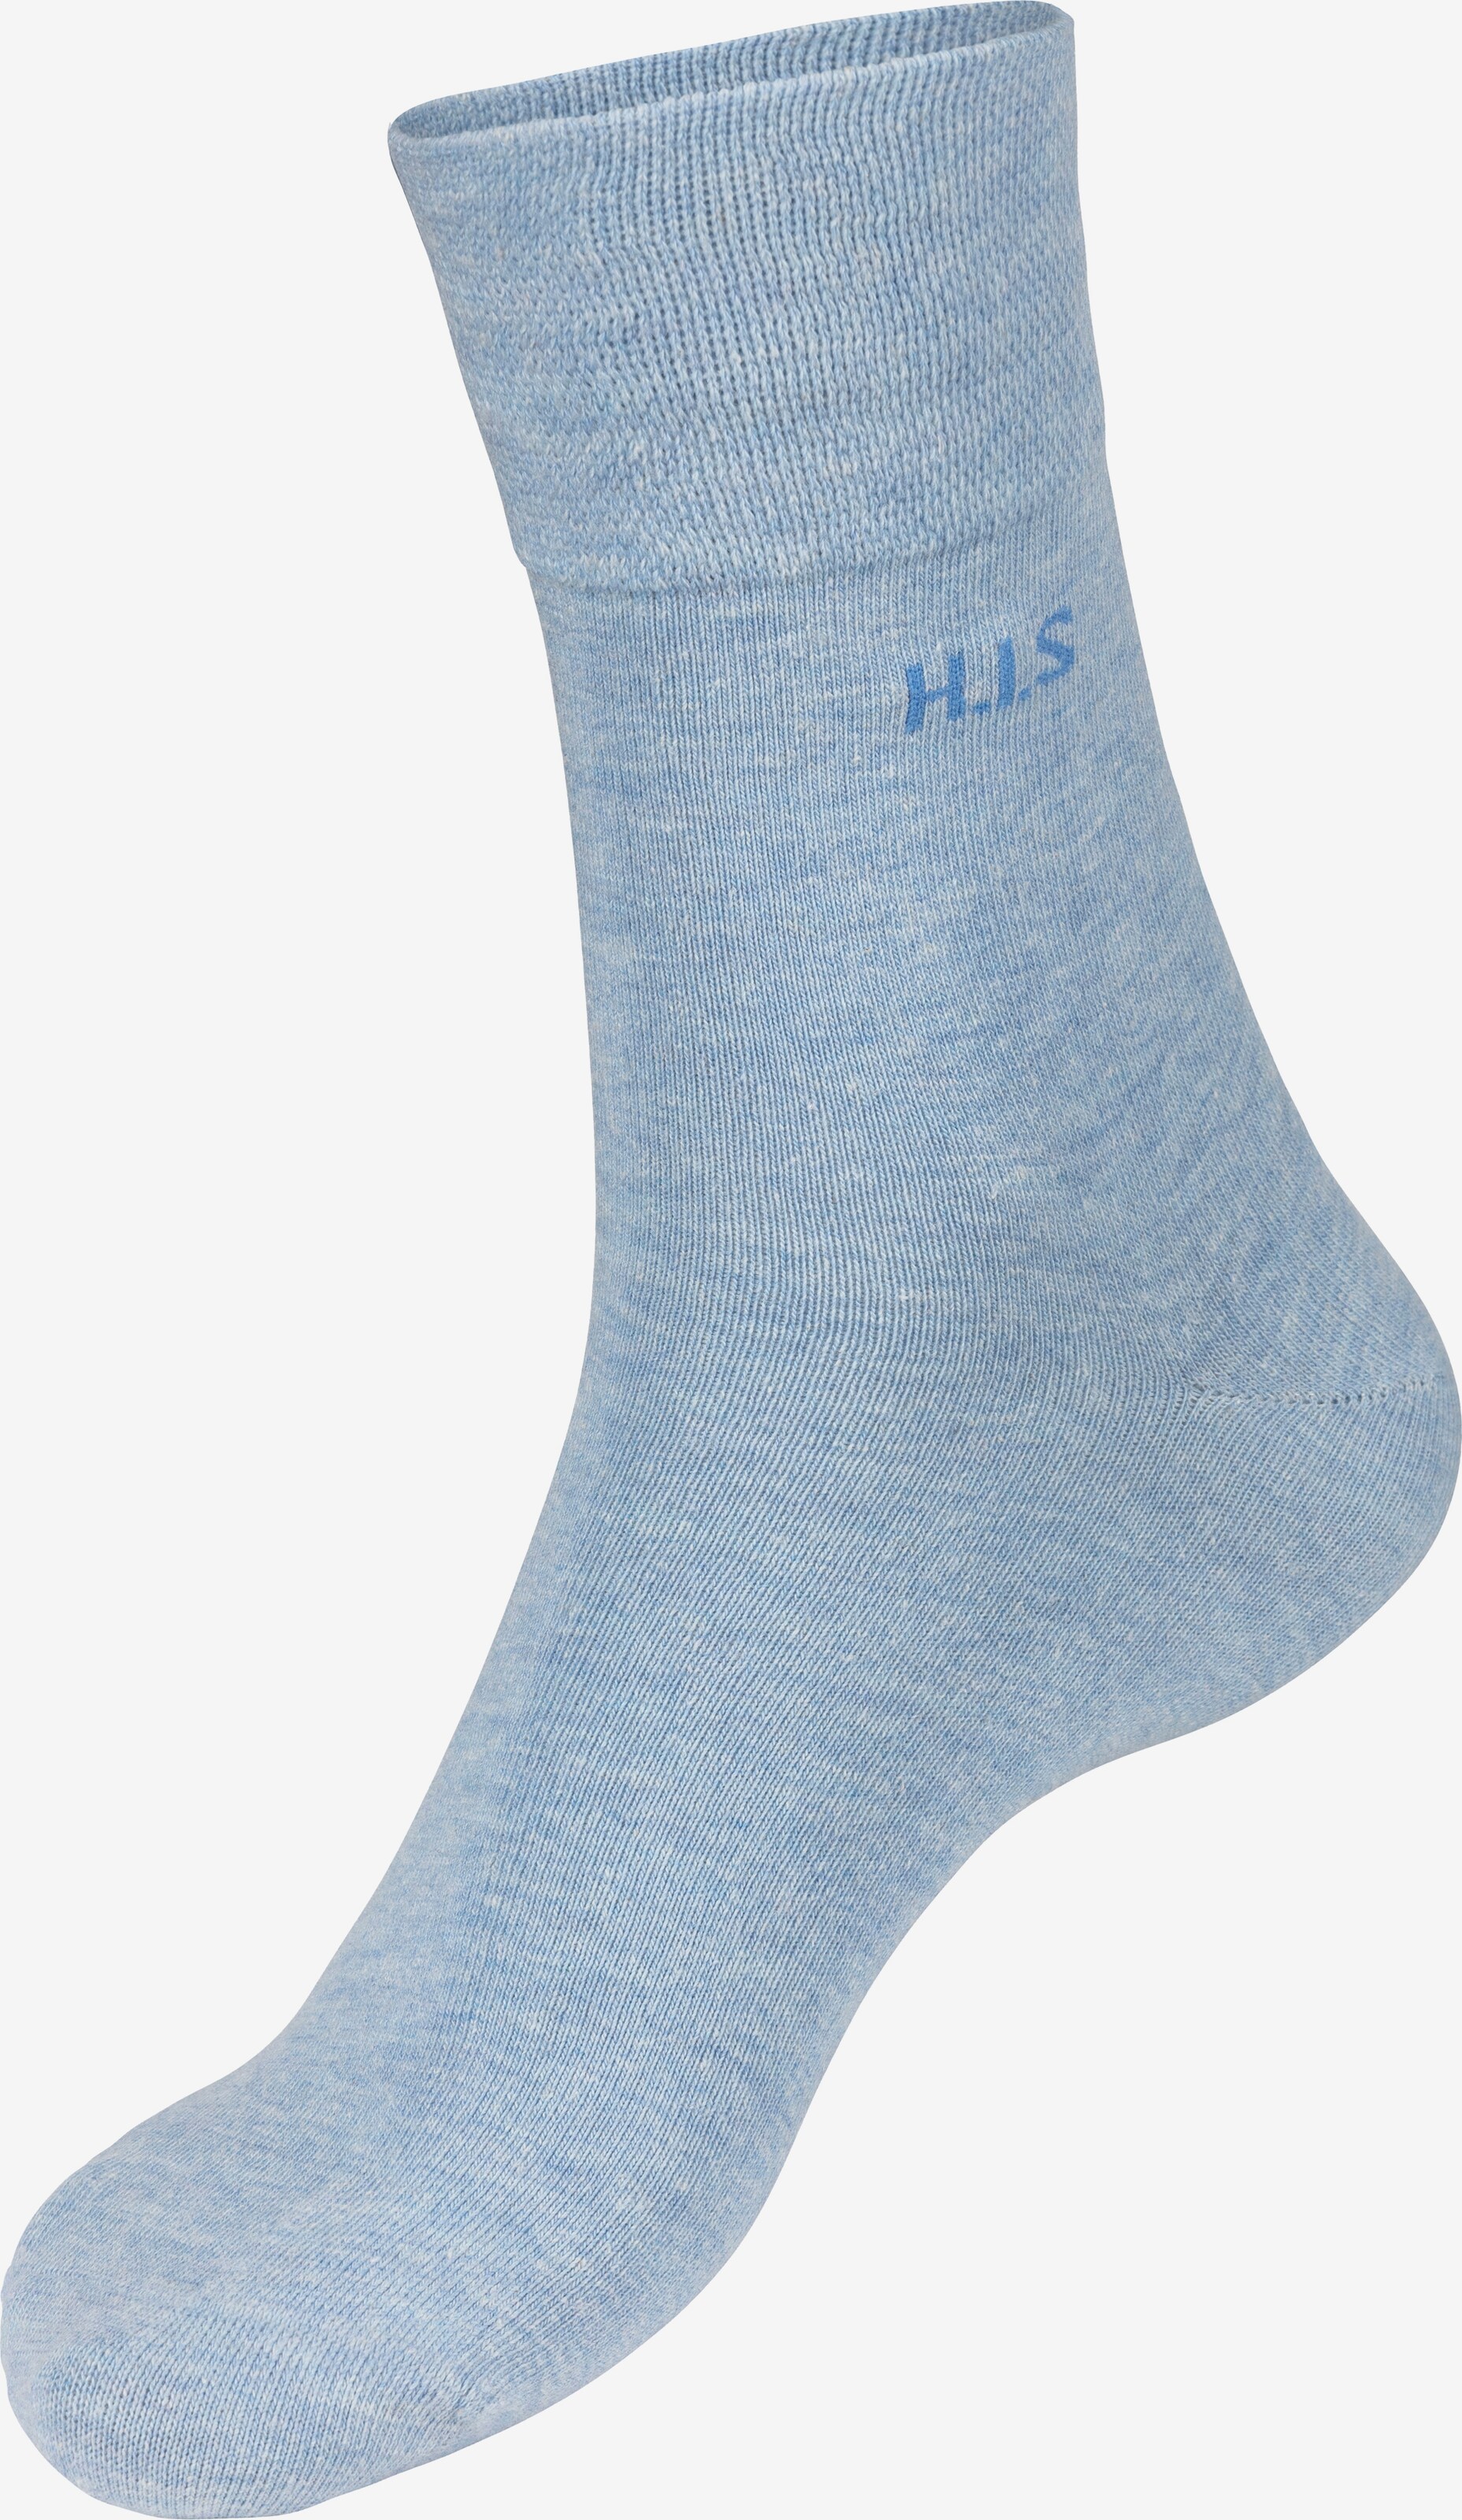 Socken | YOU Hellblau, ABOUT in H.I.S Dunkelblau